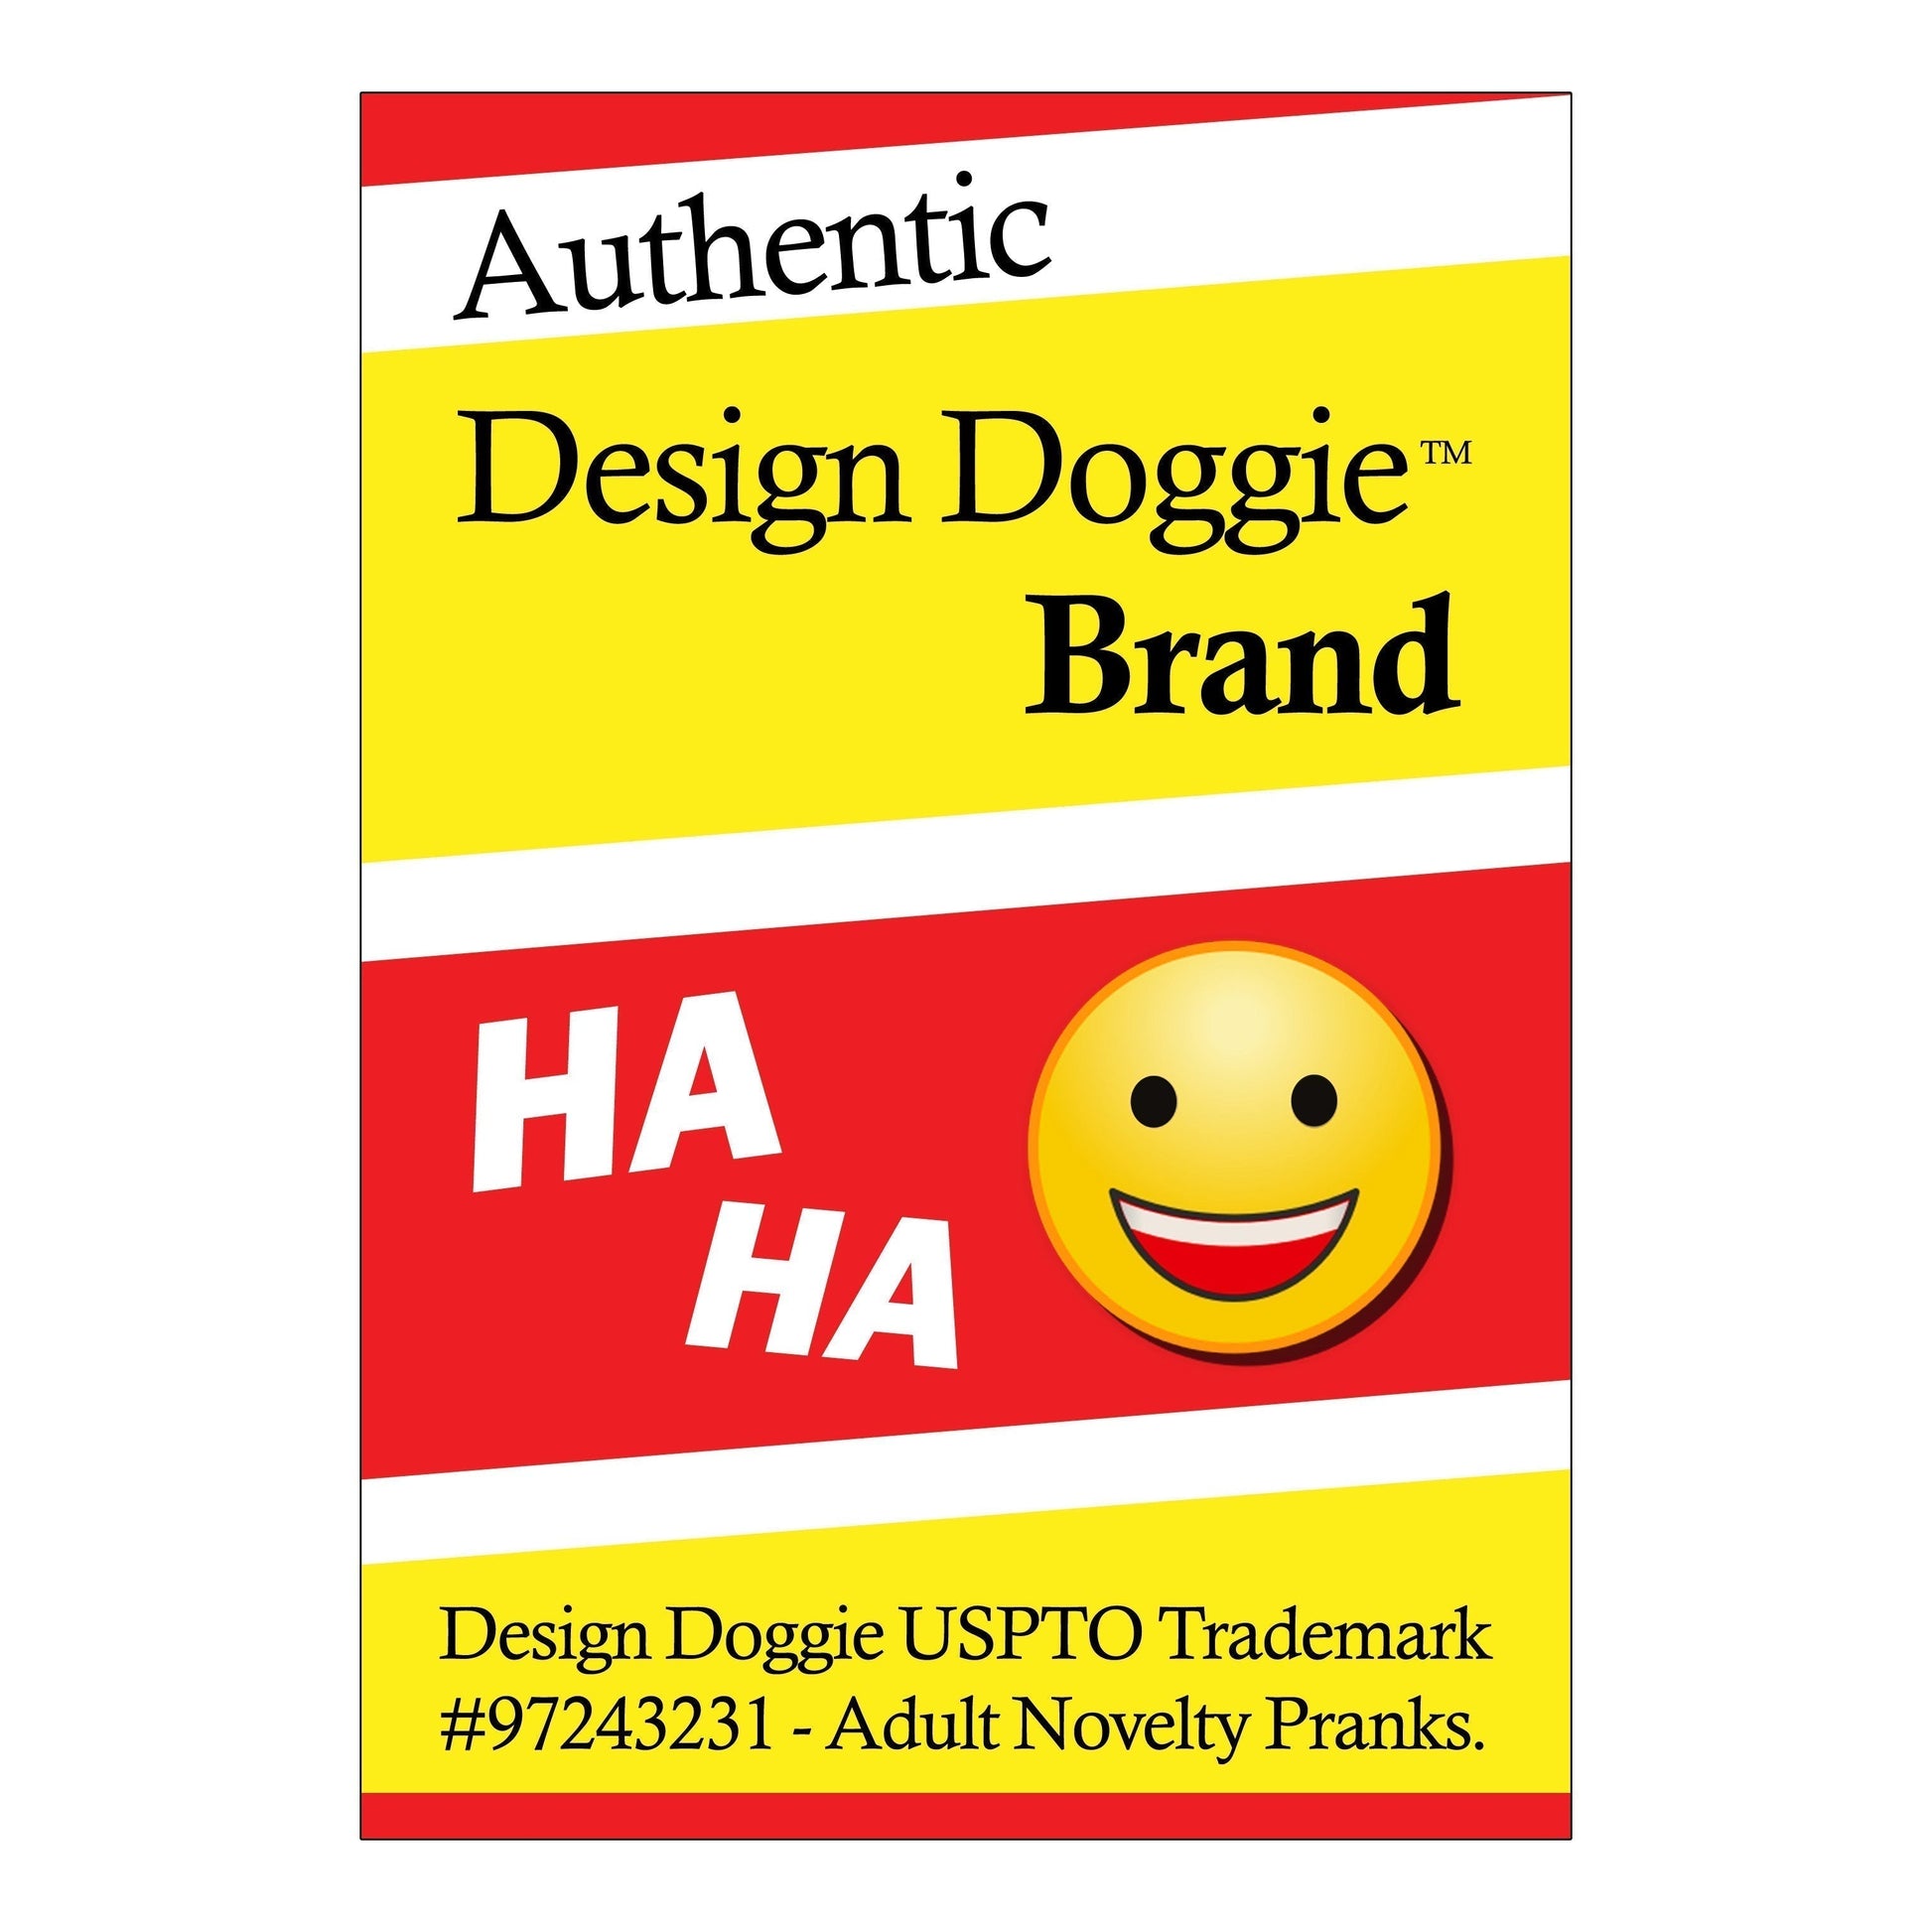 Enema Design Doggie Brand